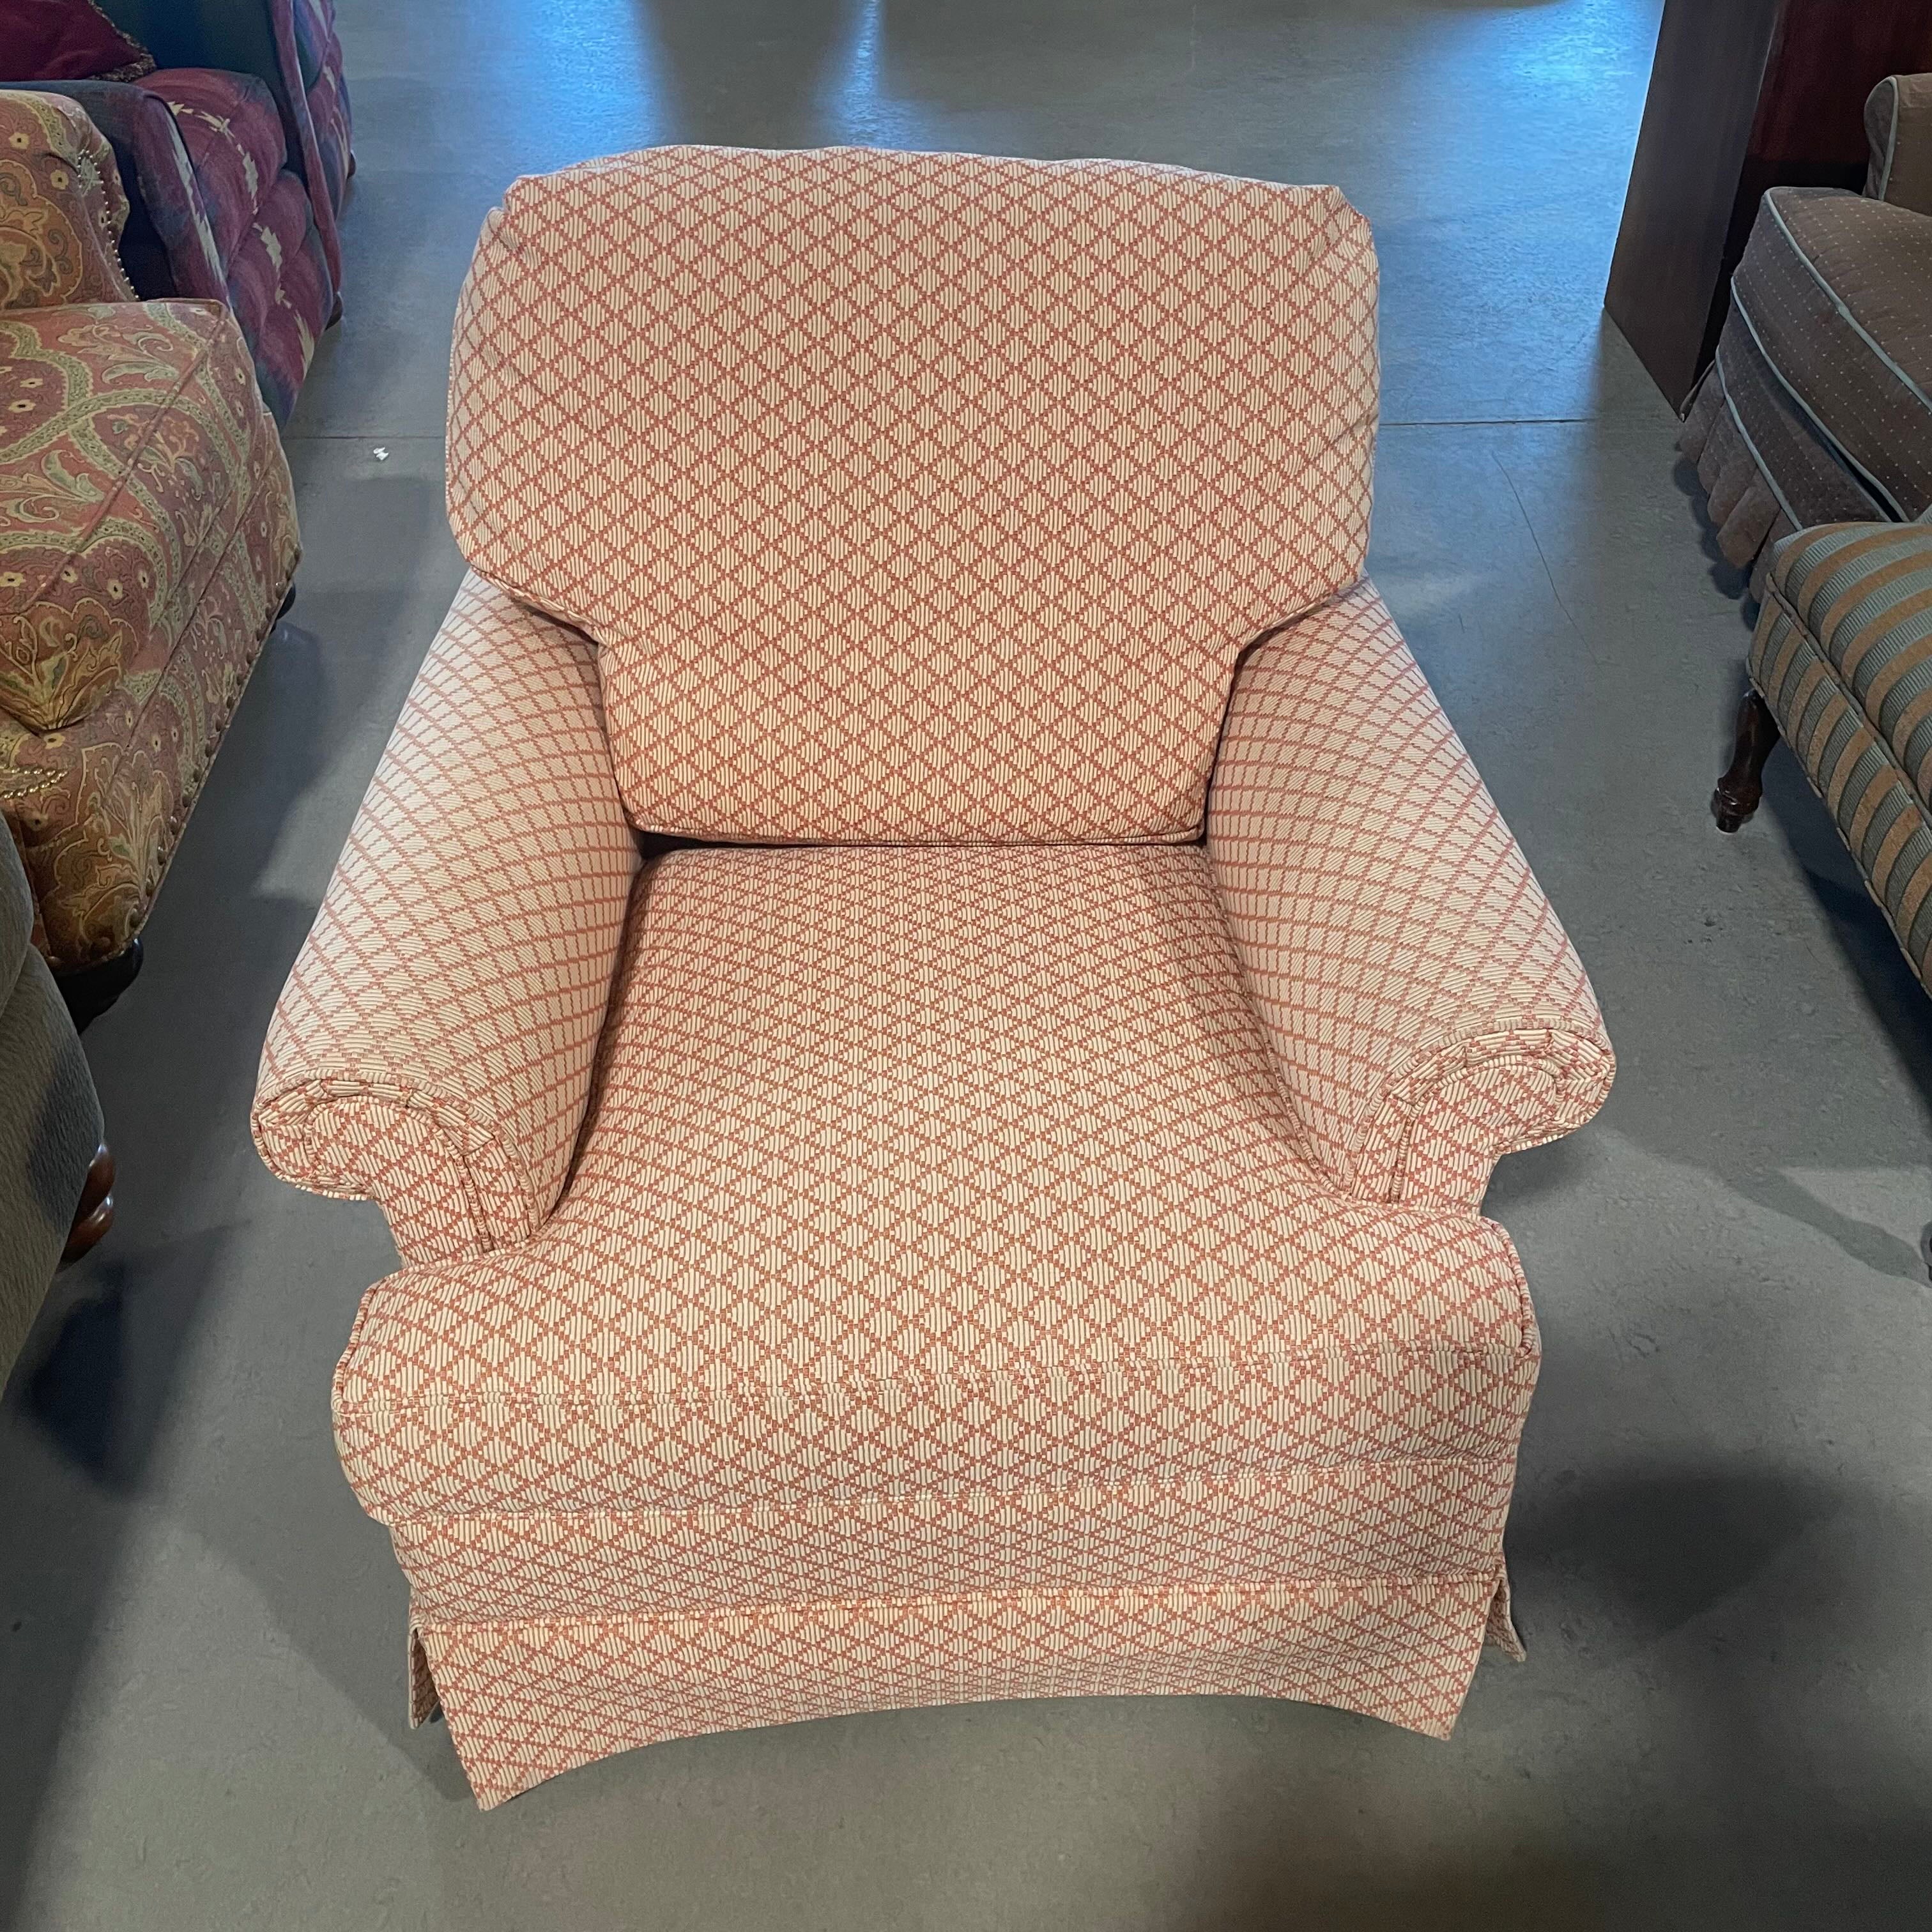 35"x 33"x 22" Sovereign Collection Hickory Chair Peach Lattice Design Chair